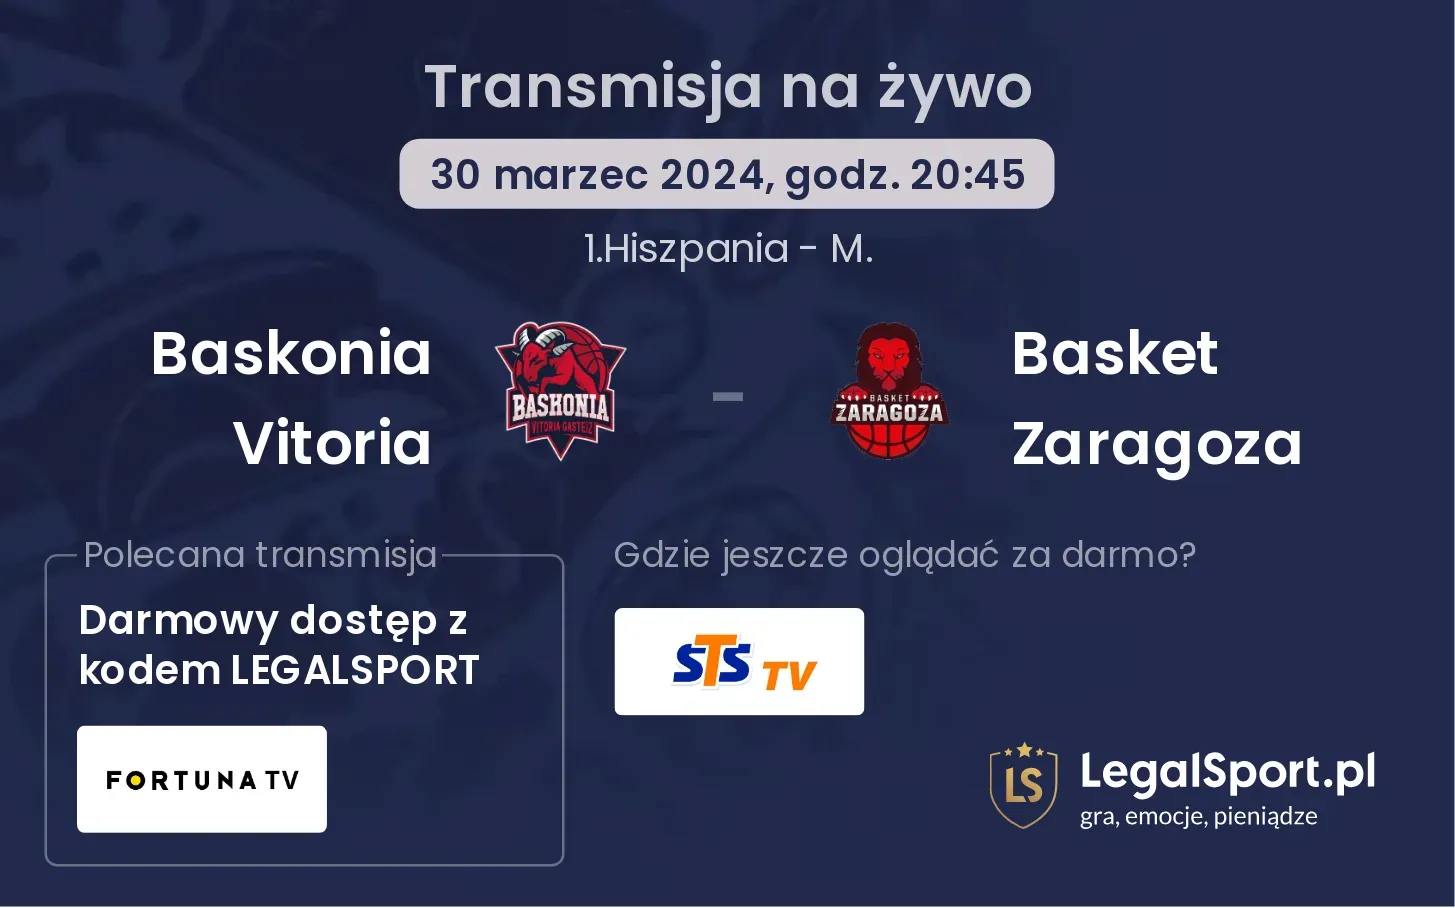 Baskonia Vitoria - Basket Zaragoza transmisja na żywo